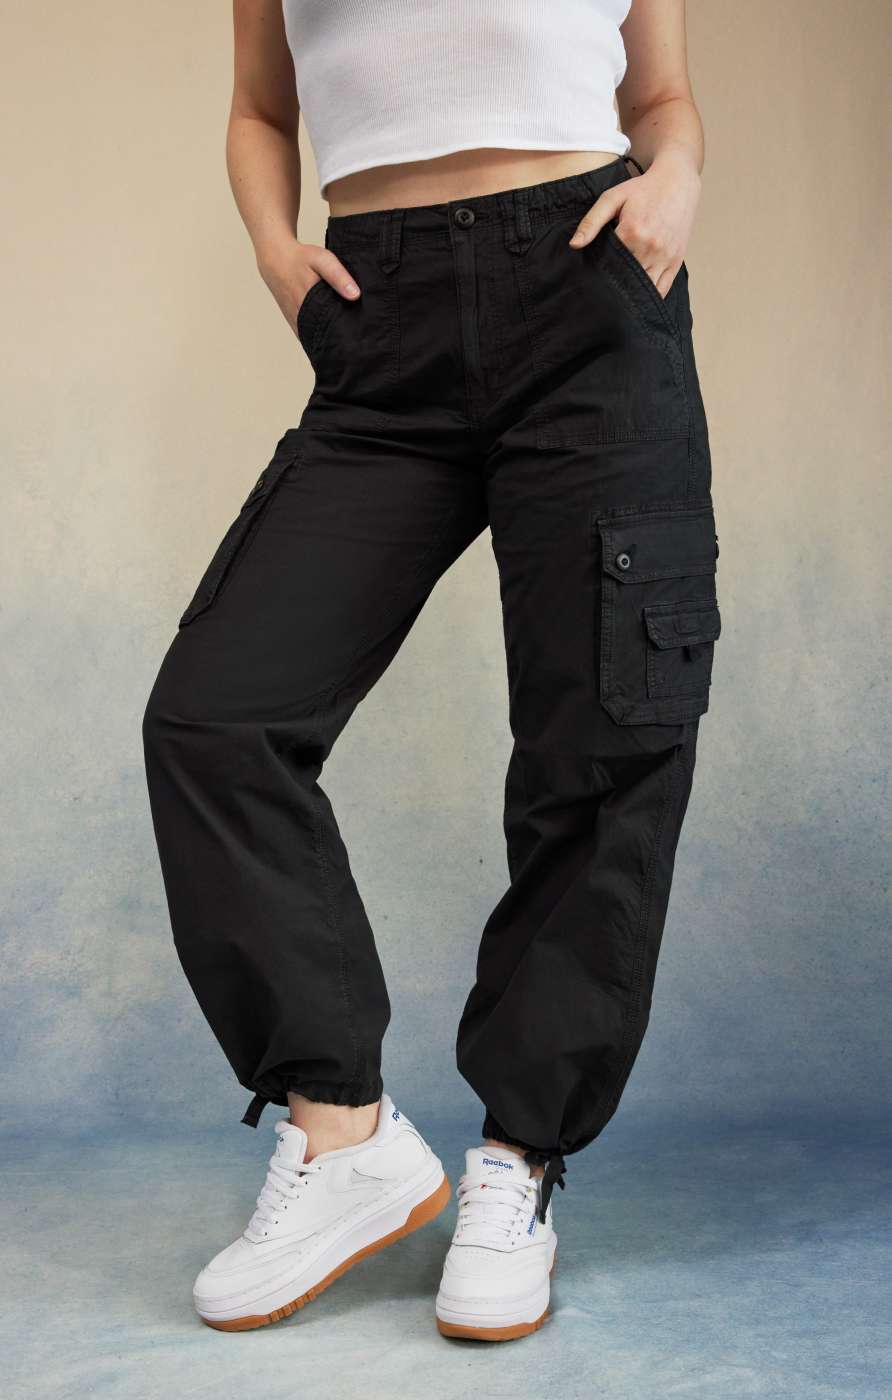 Pantalones Mujer American Street Cargo Pantalones Casual para